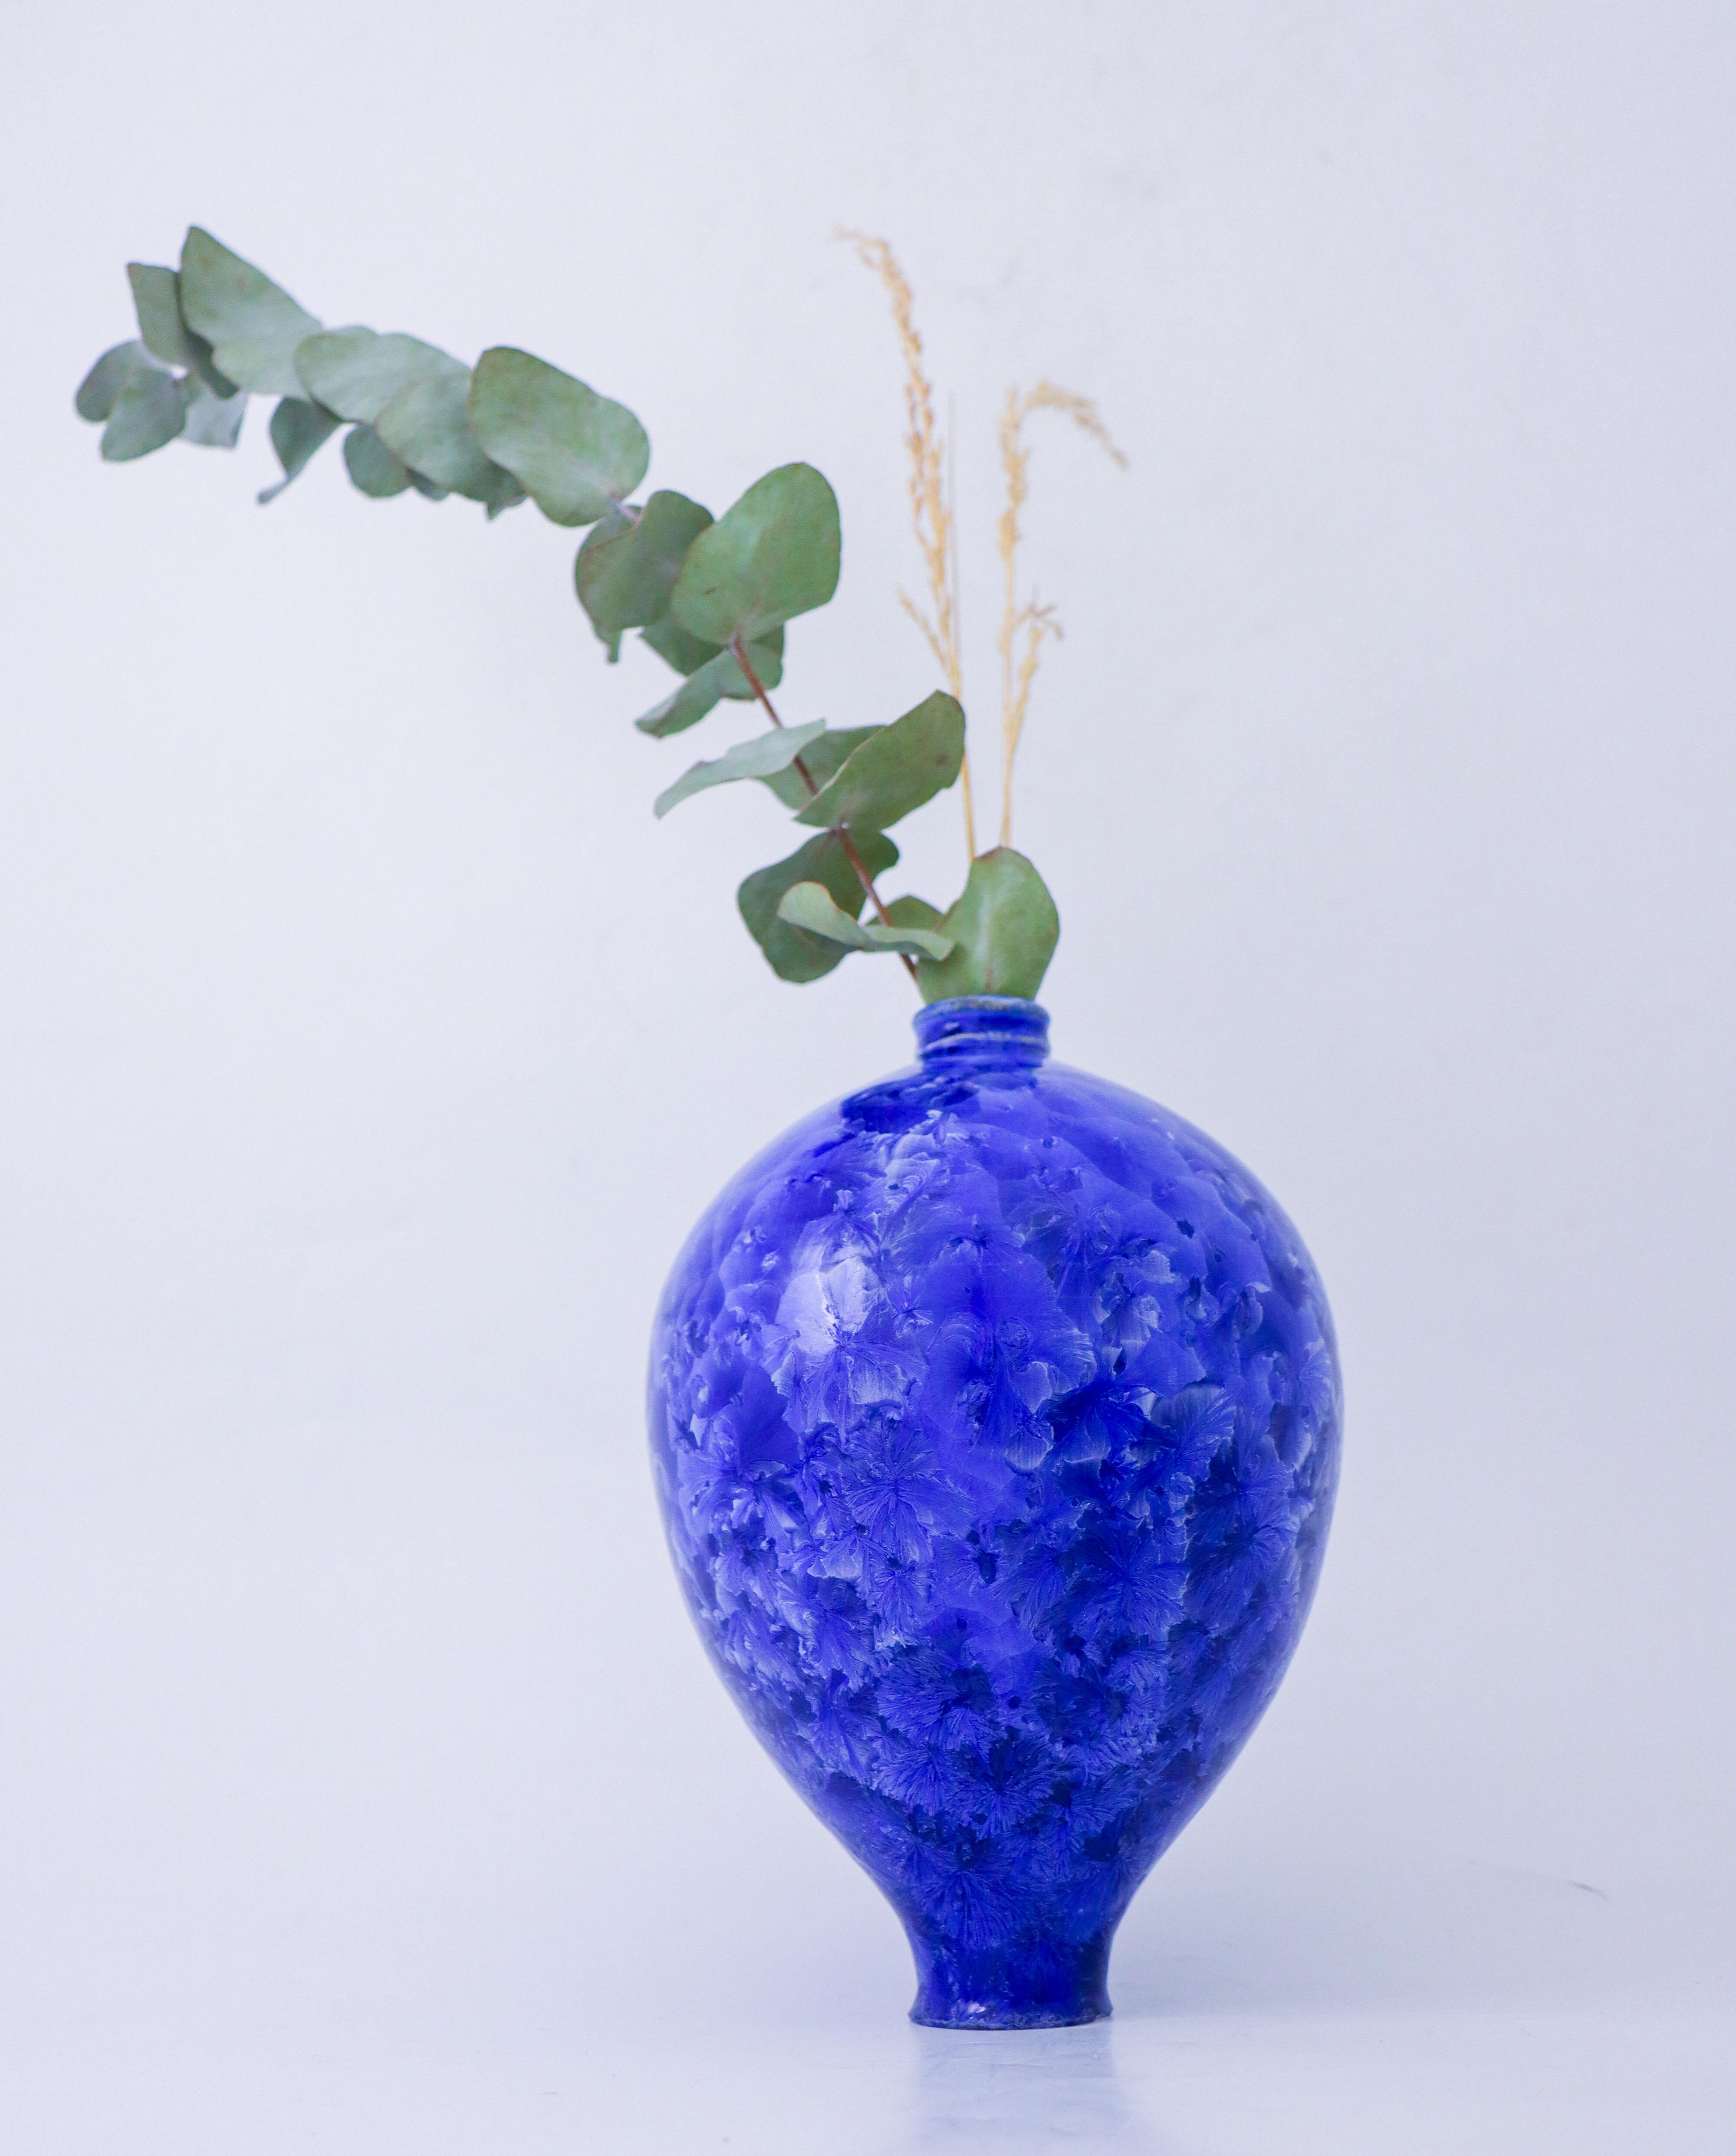 Glazed Isak Isaksson - Blue Ceramic Vase - Crystalline Glaze - Contemporary Artist For Sale